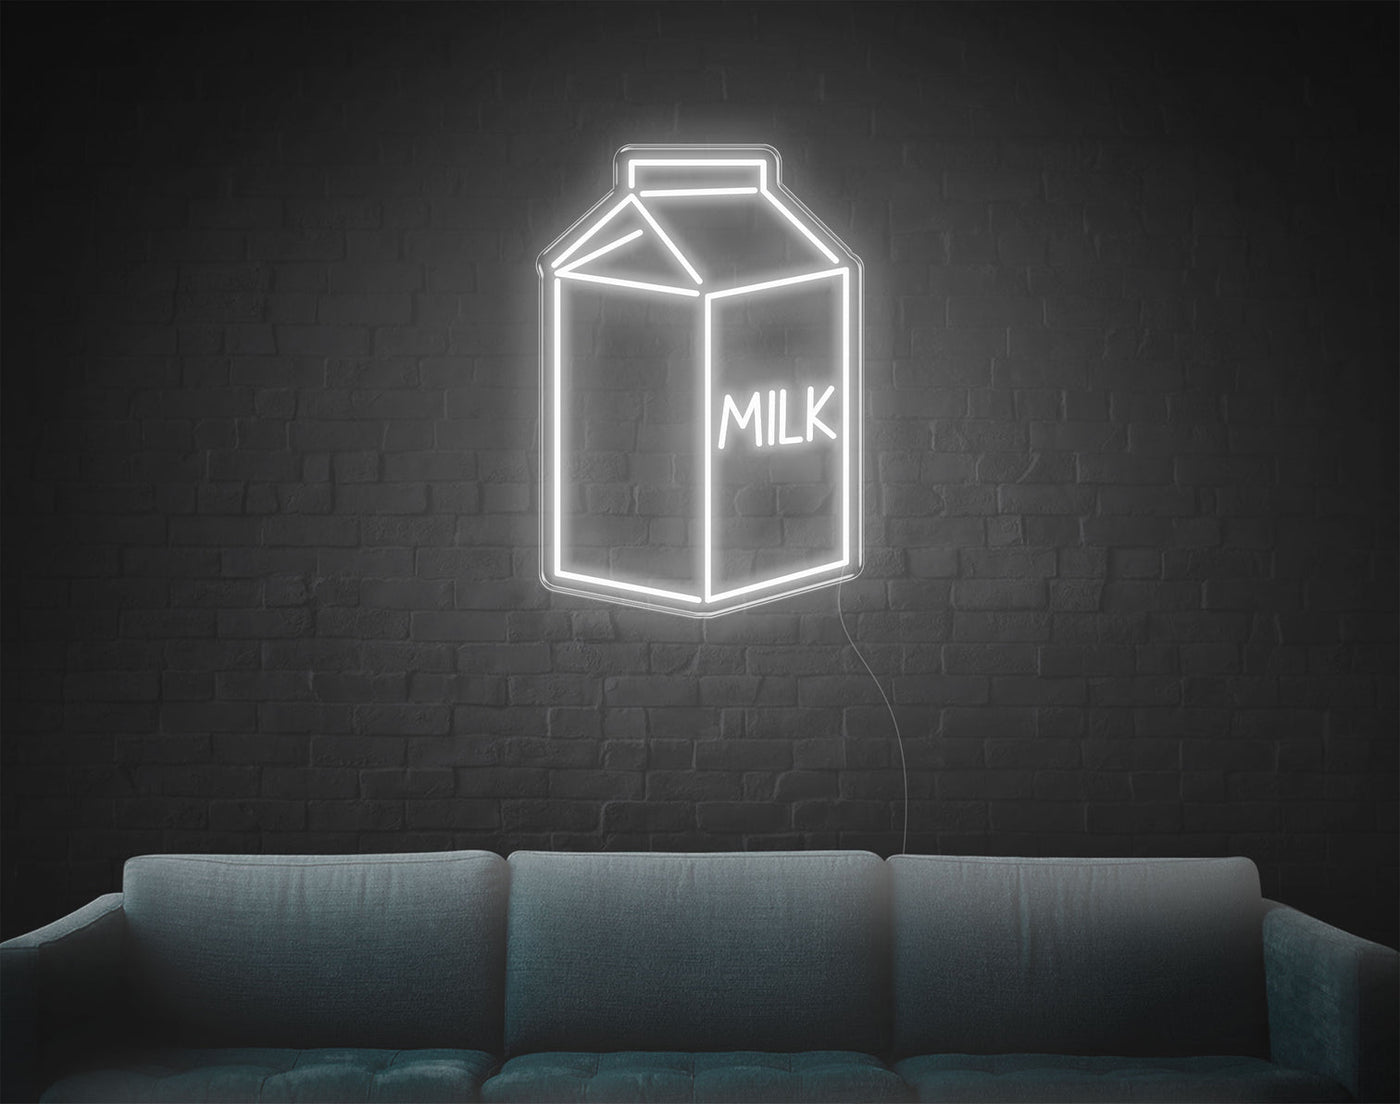 Milk LED Neon Sign - 26inch x 18inchWhite